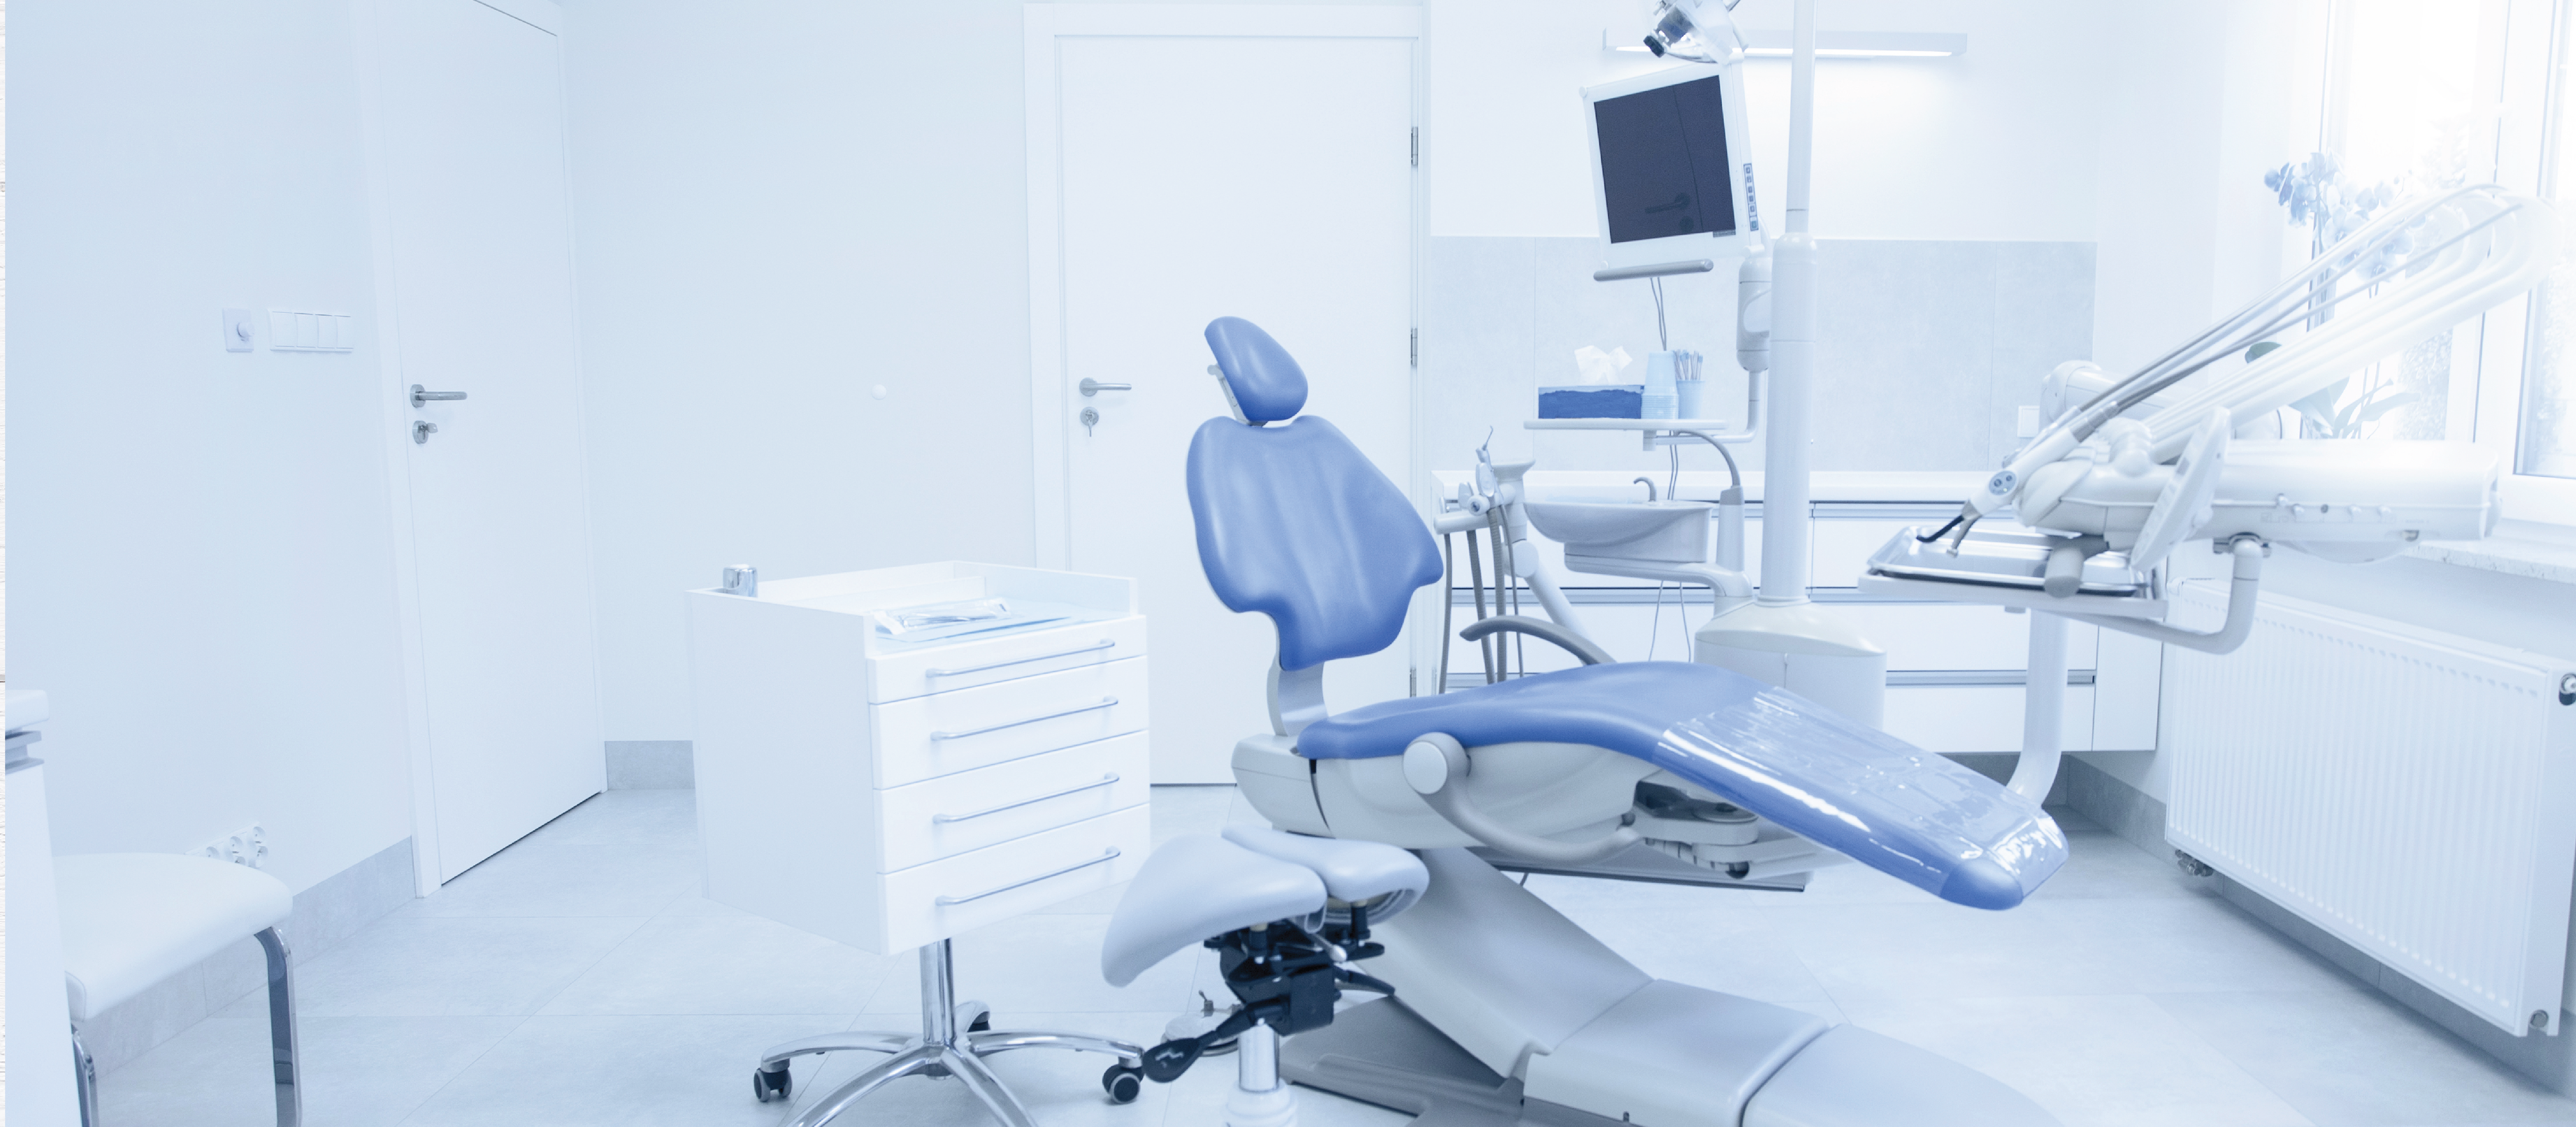 blue dental chair in dental office